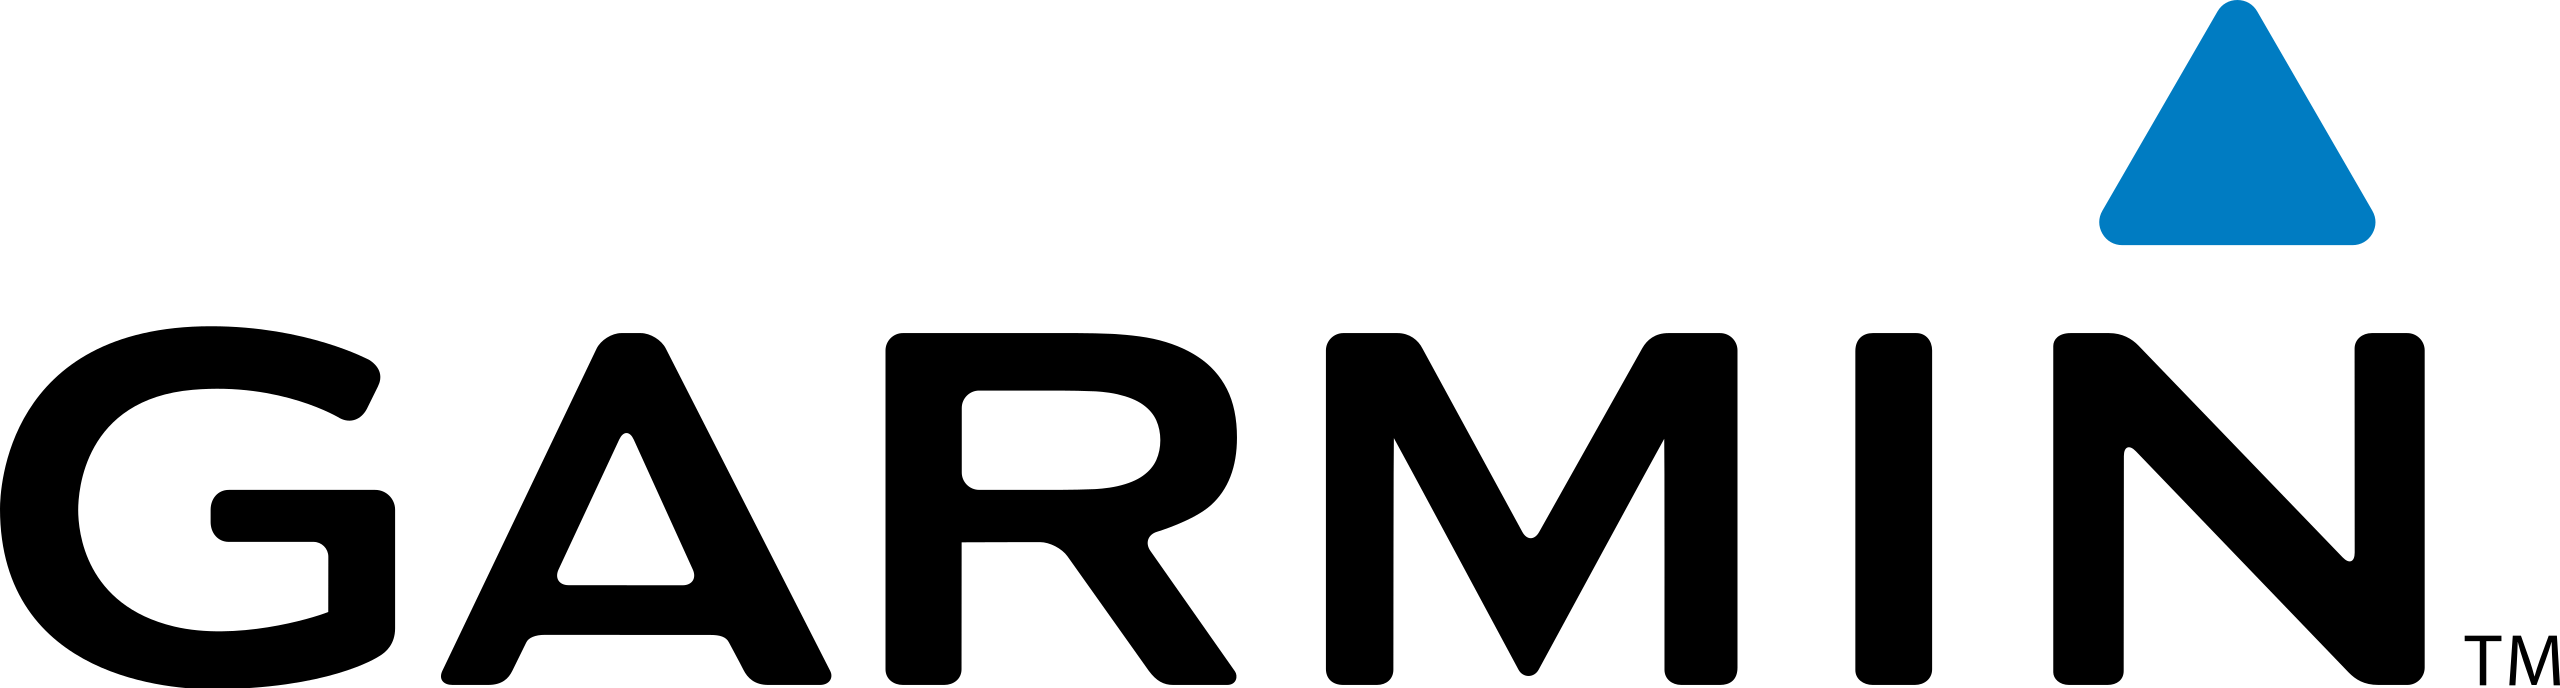 Garmin_logo_2006.svg_